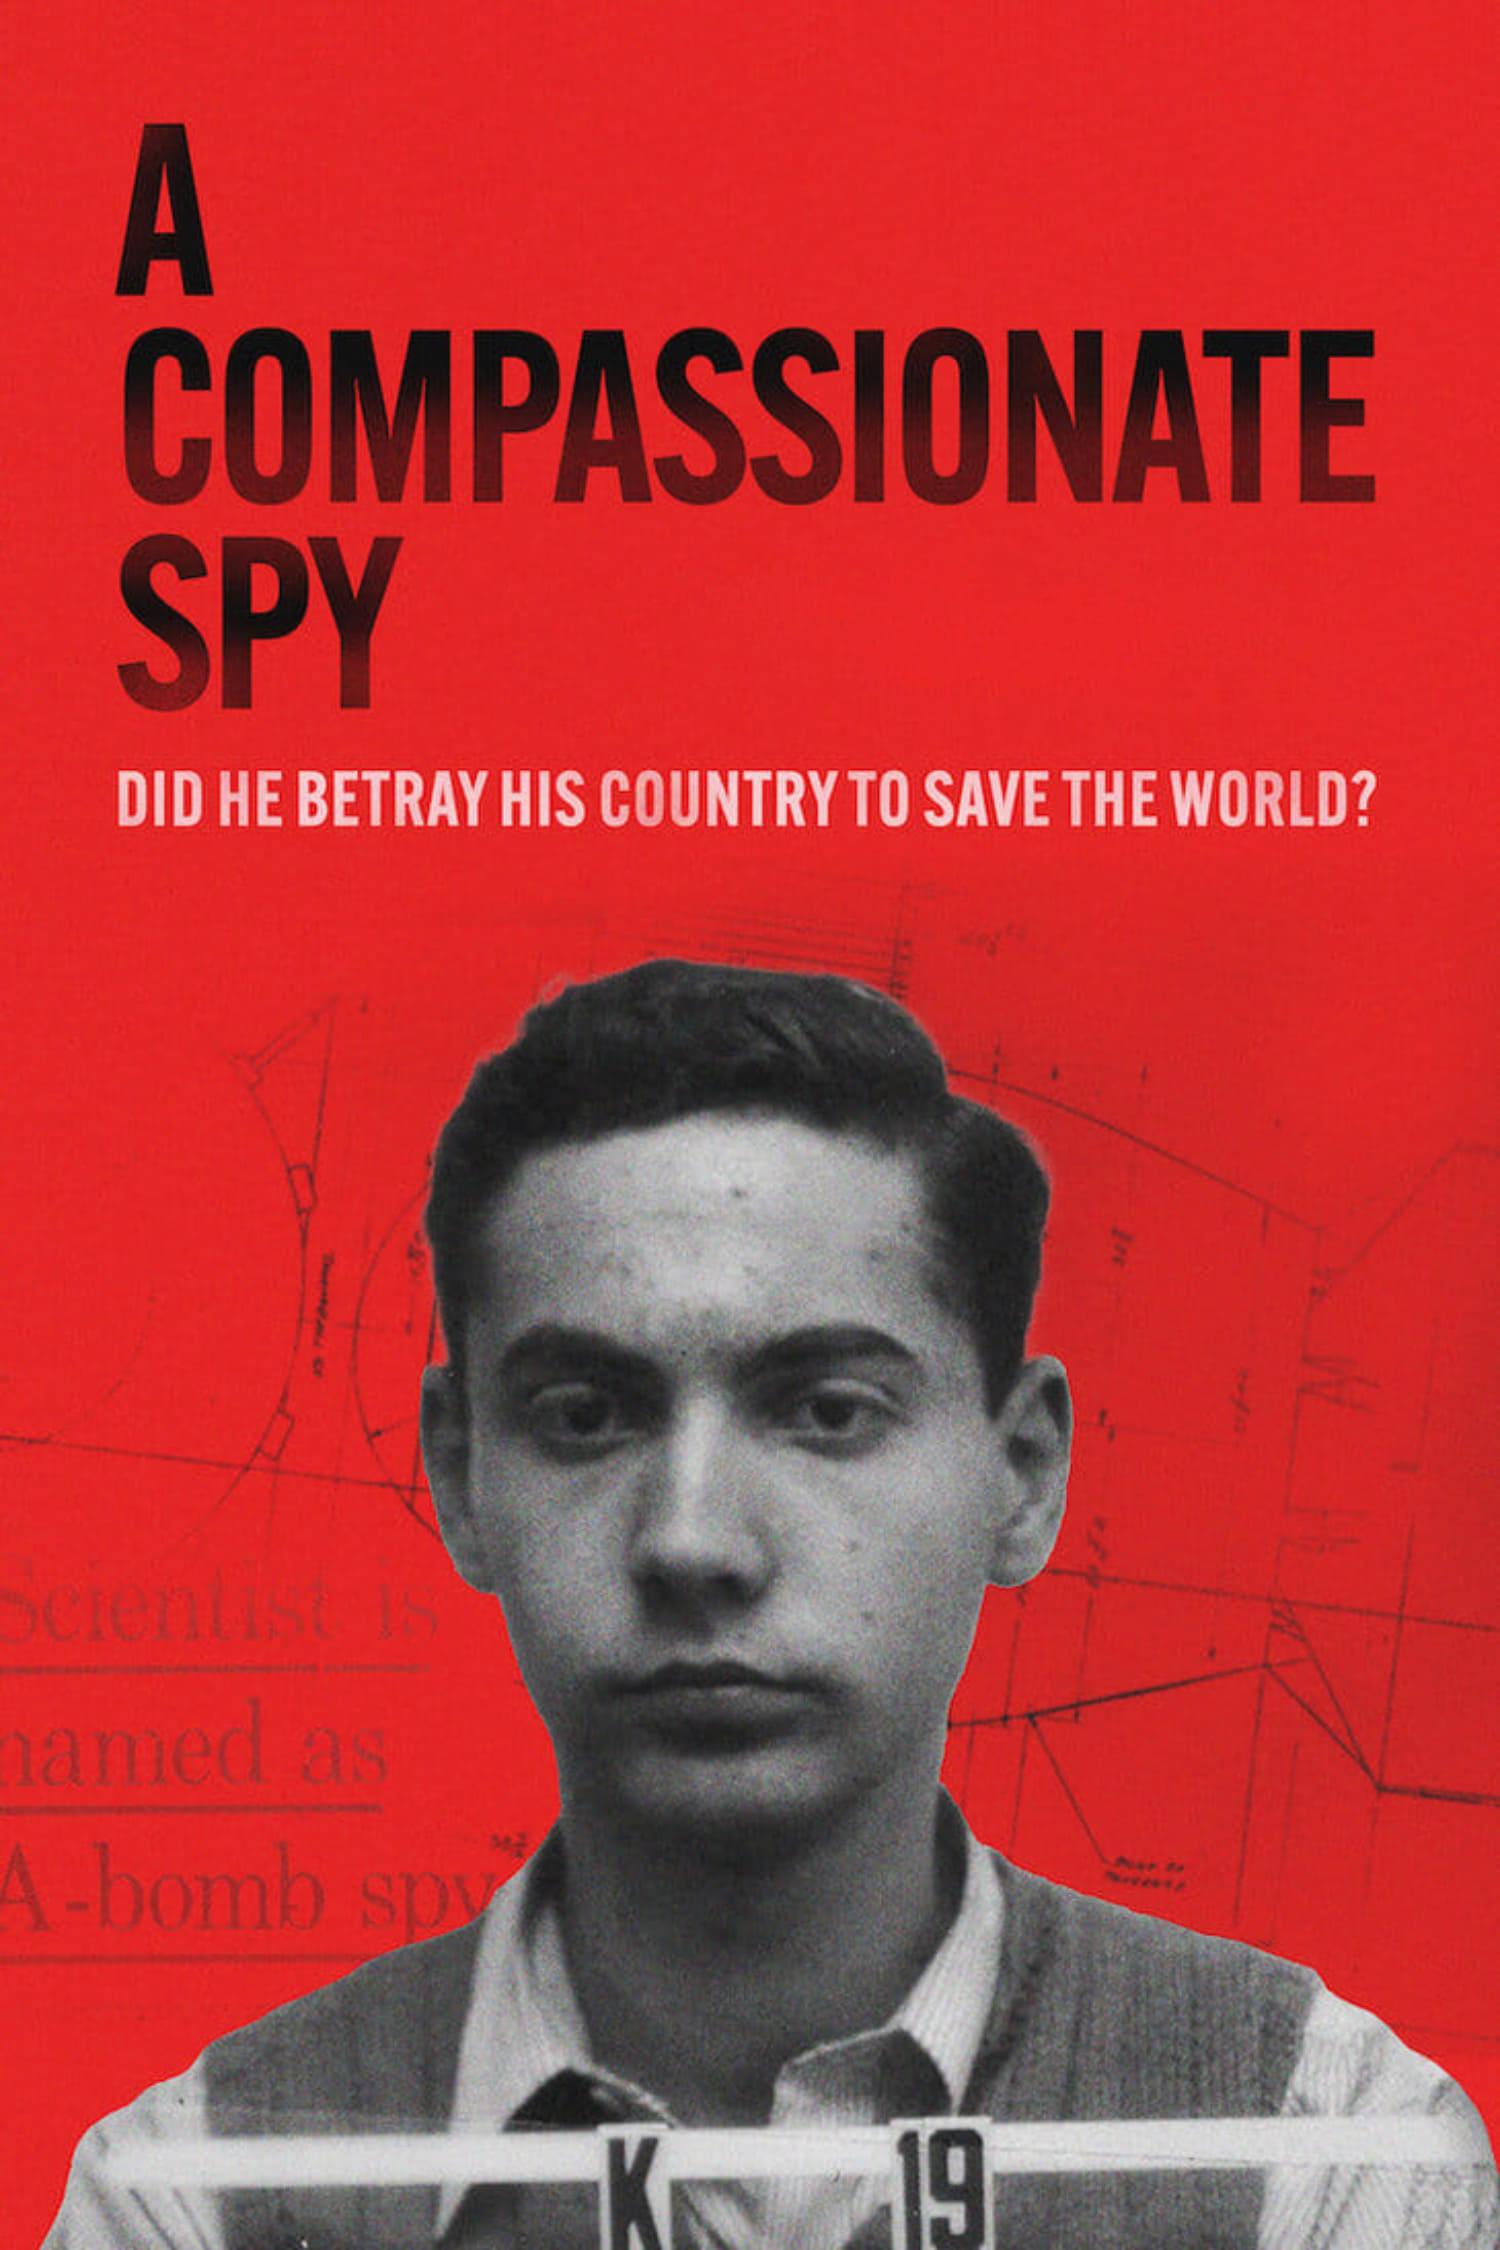 A Compassionate Spy poster